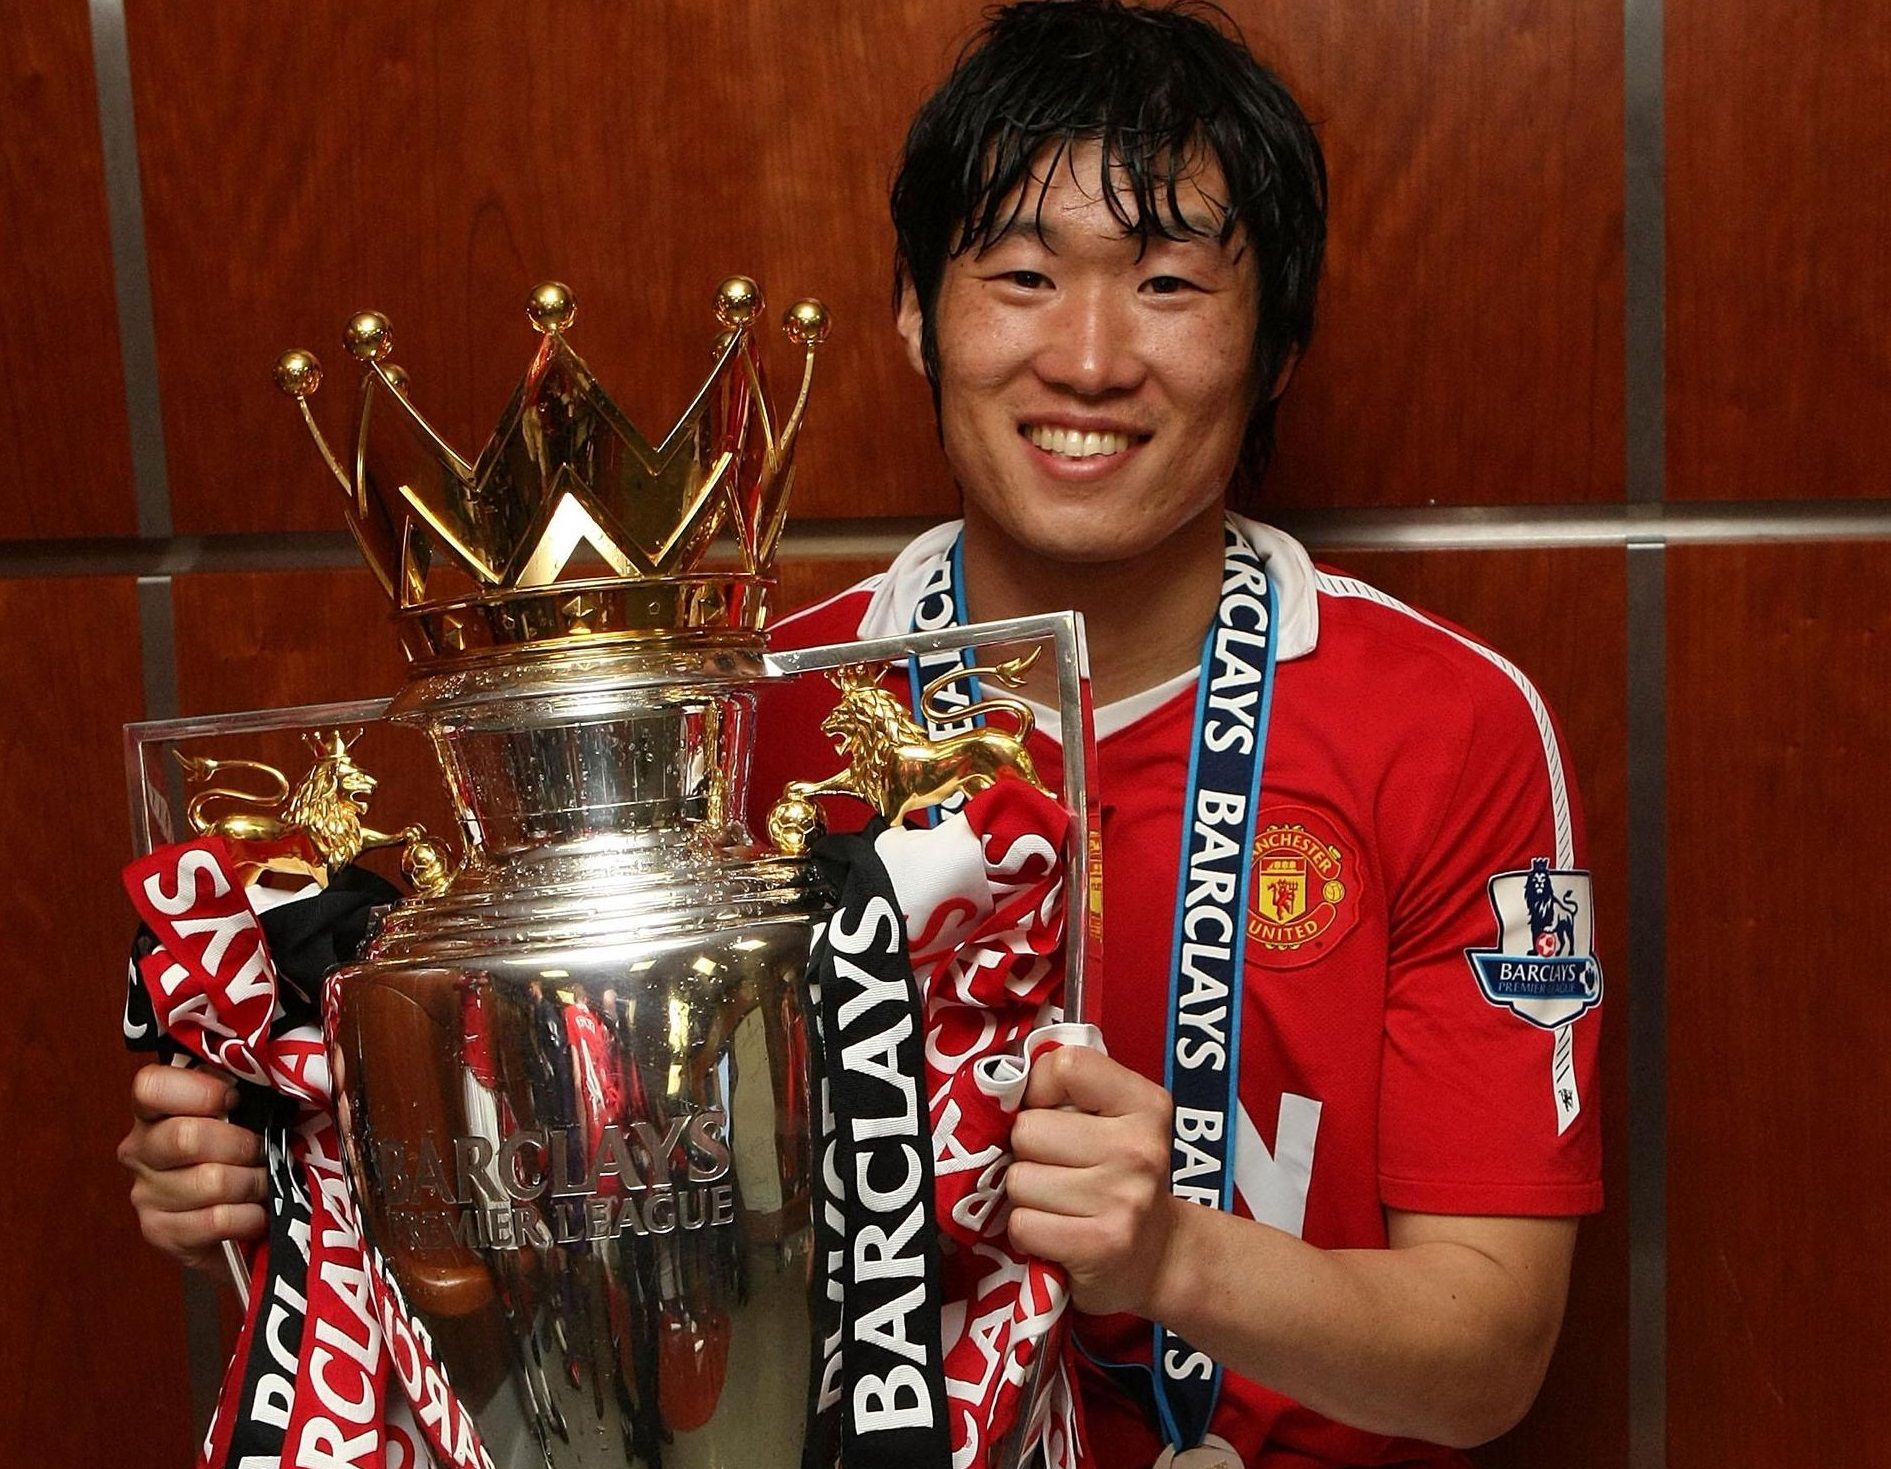 Ти сун. Парк Джи Сун футболист. Пак Чжи Сун Манчестер Юнайтед 2008. Пак Джи Сун корейский футболист. Сун Цютун Эрха.